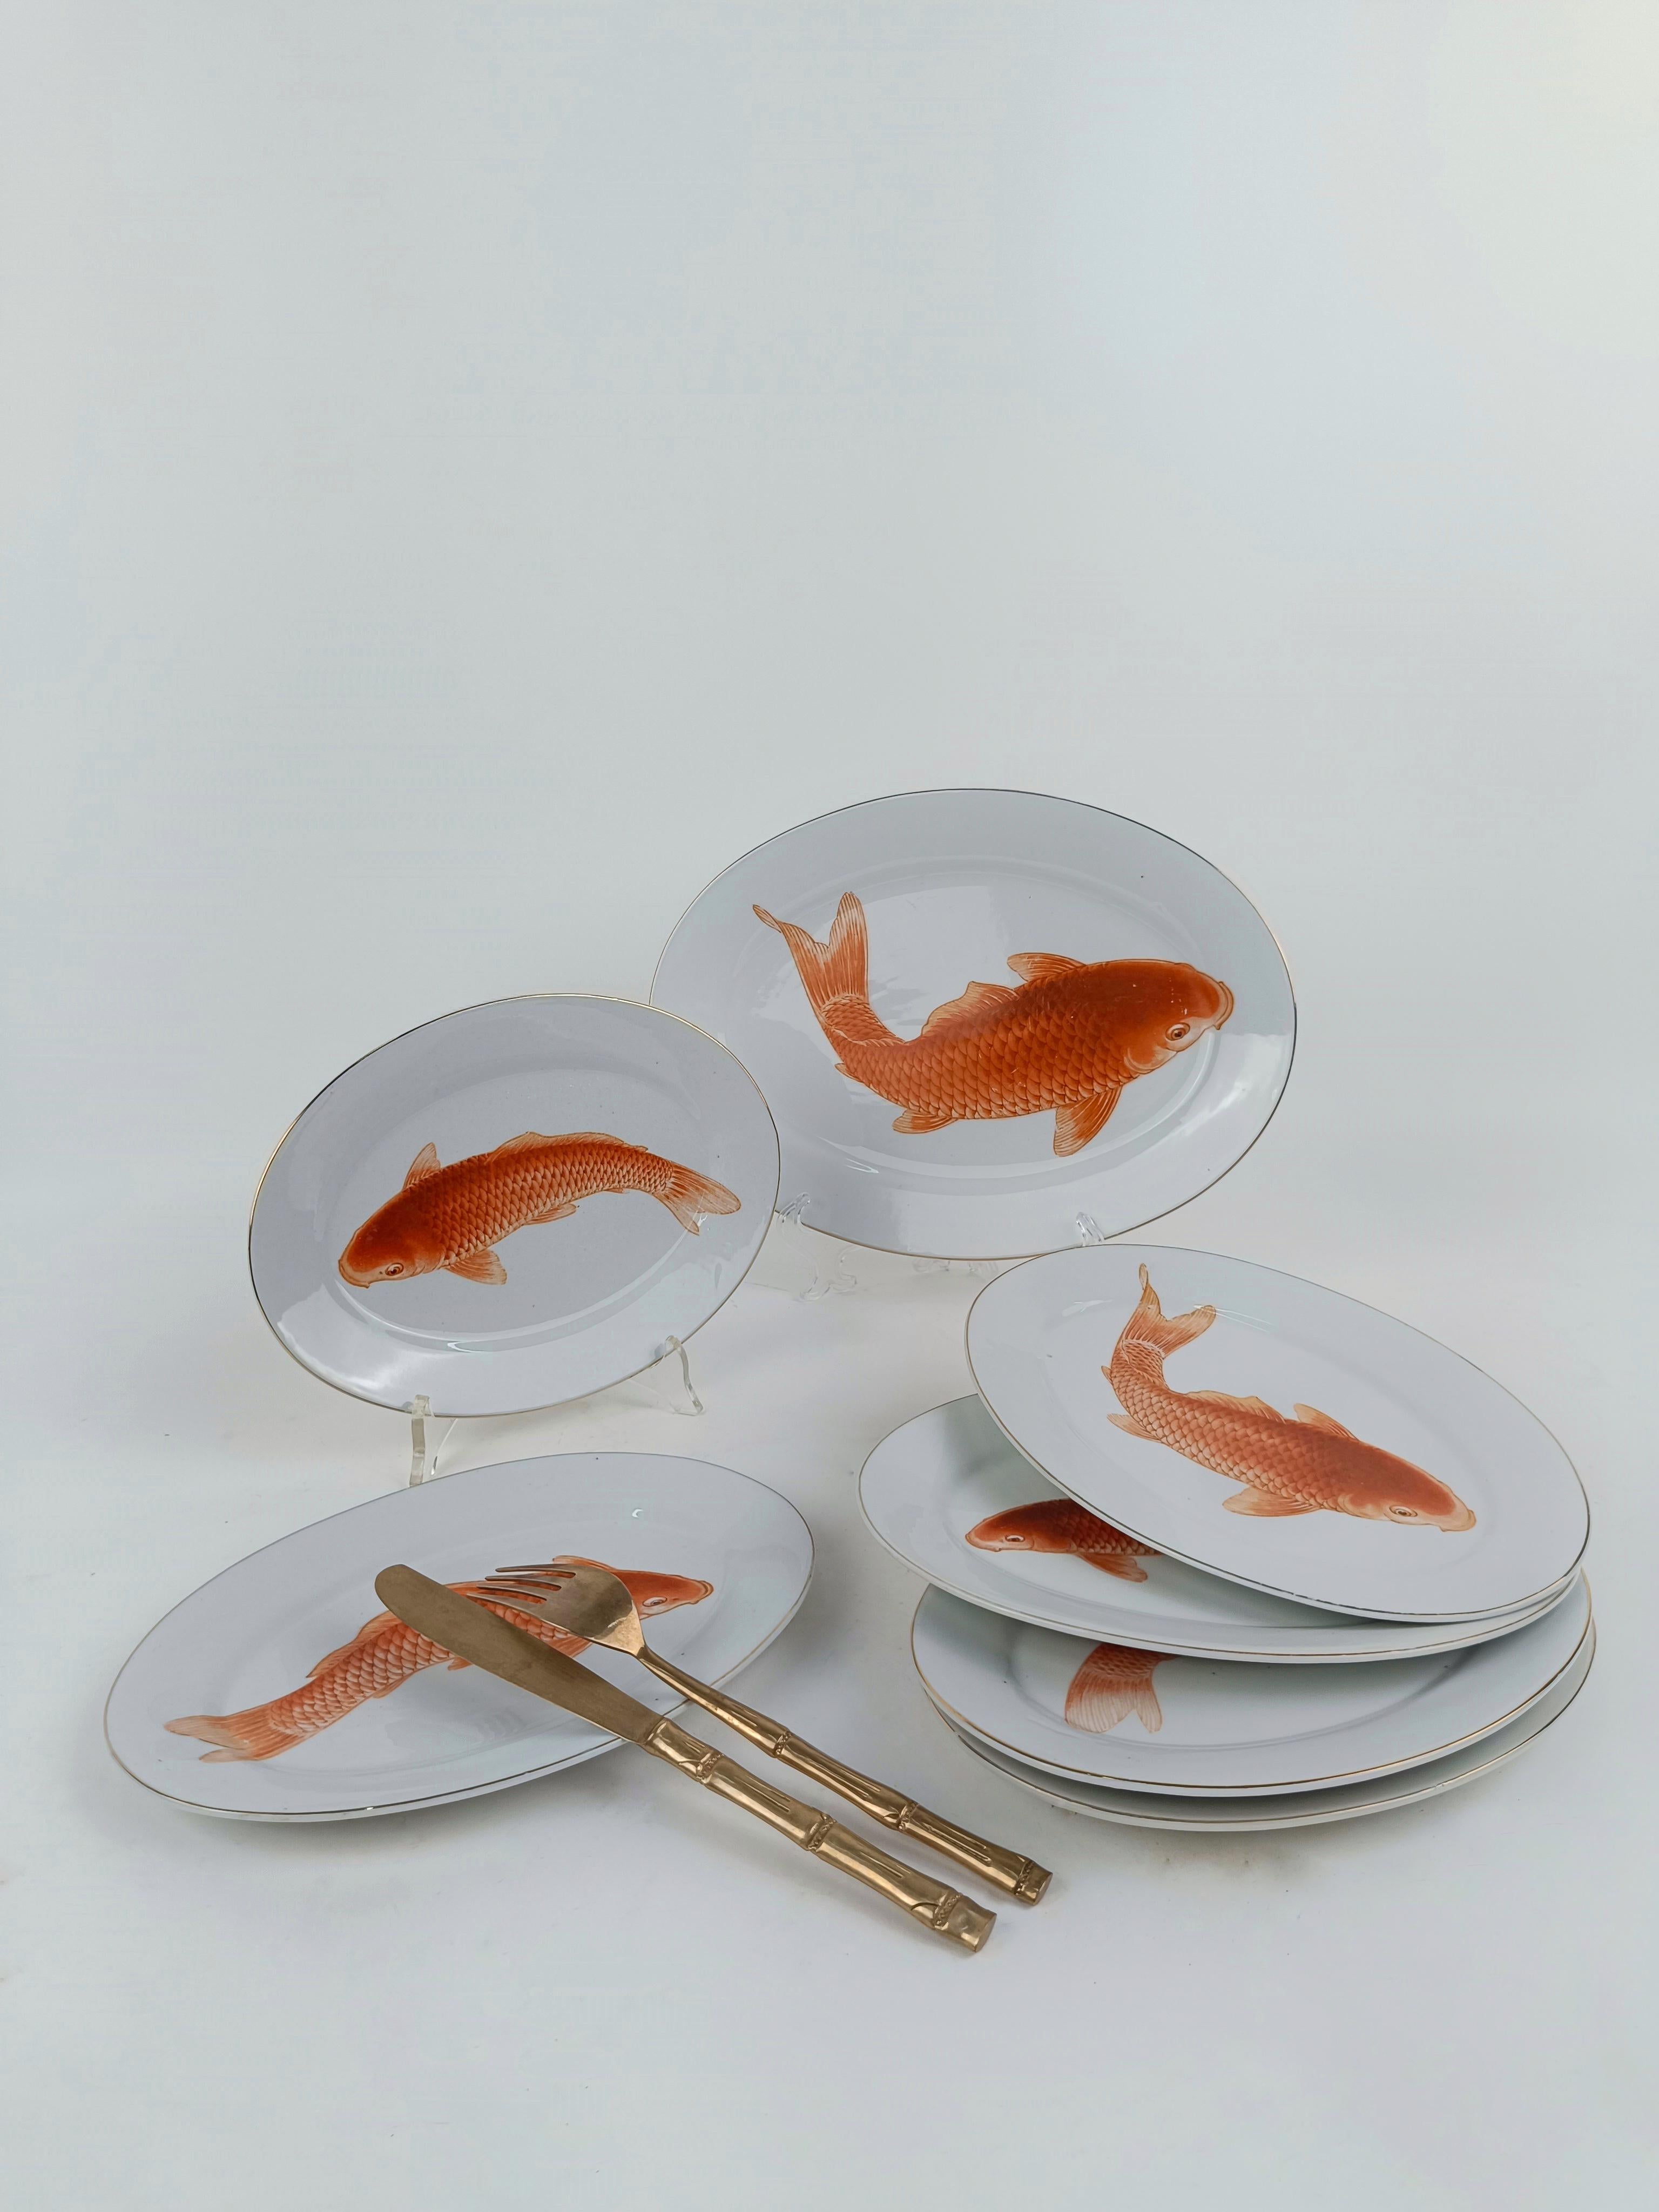 Set of Vintage Fish Service Plates in Bavarian Porcelain with Japanese decor For Sale 6